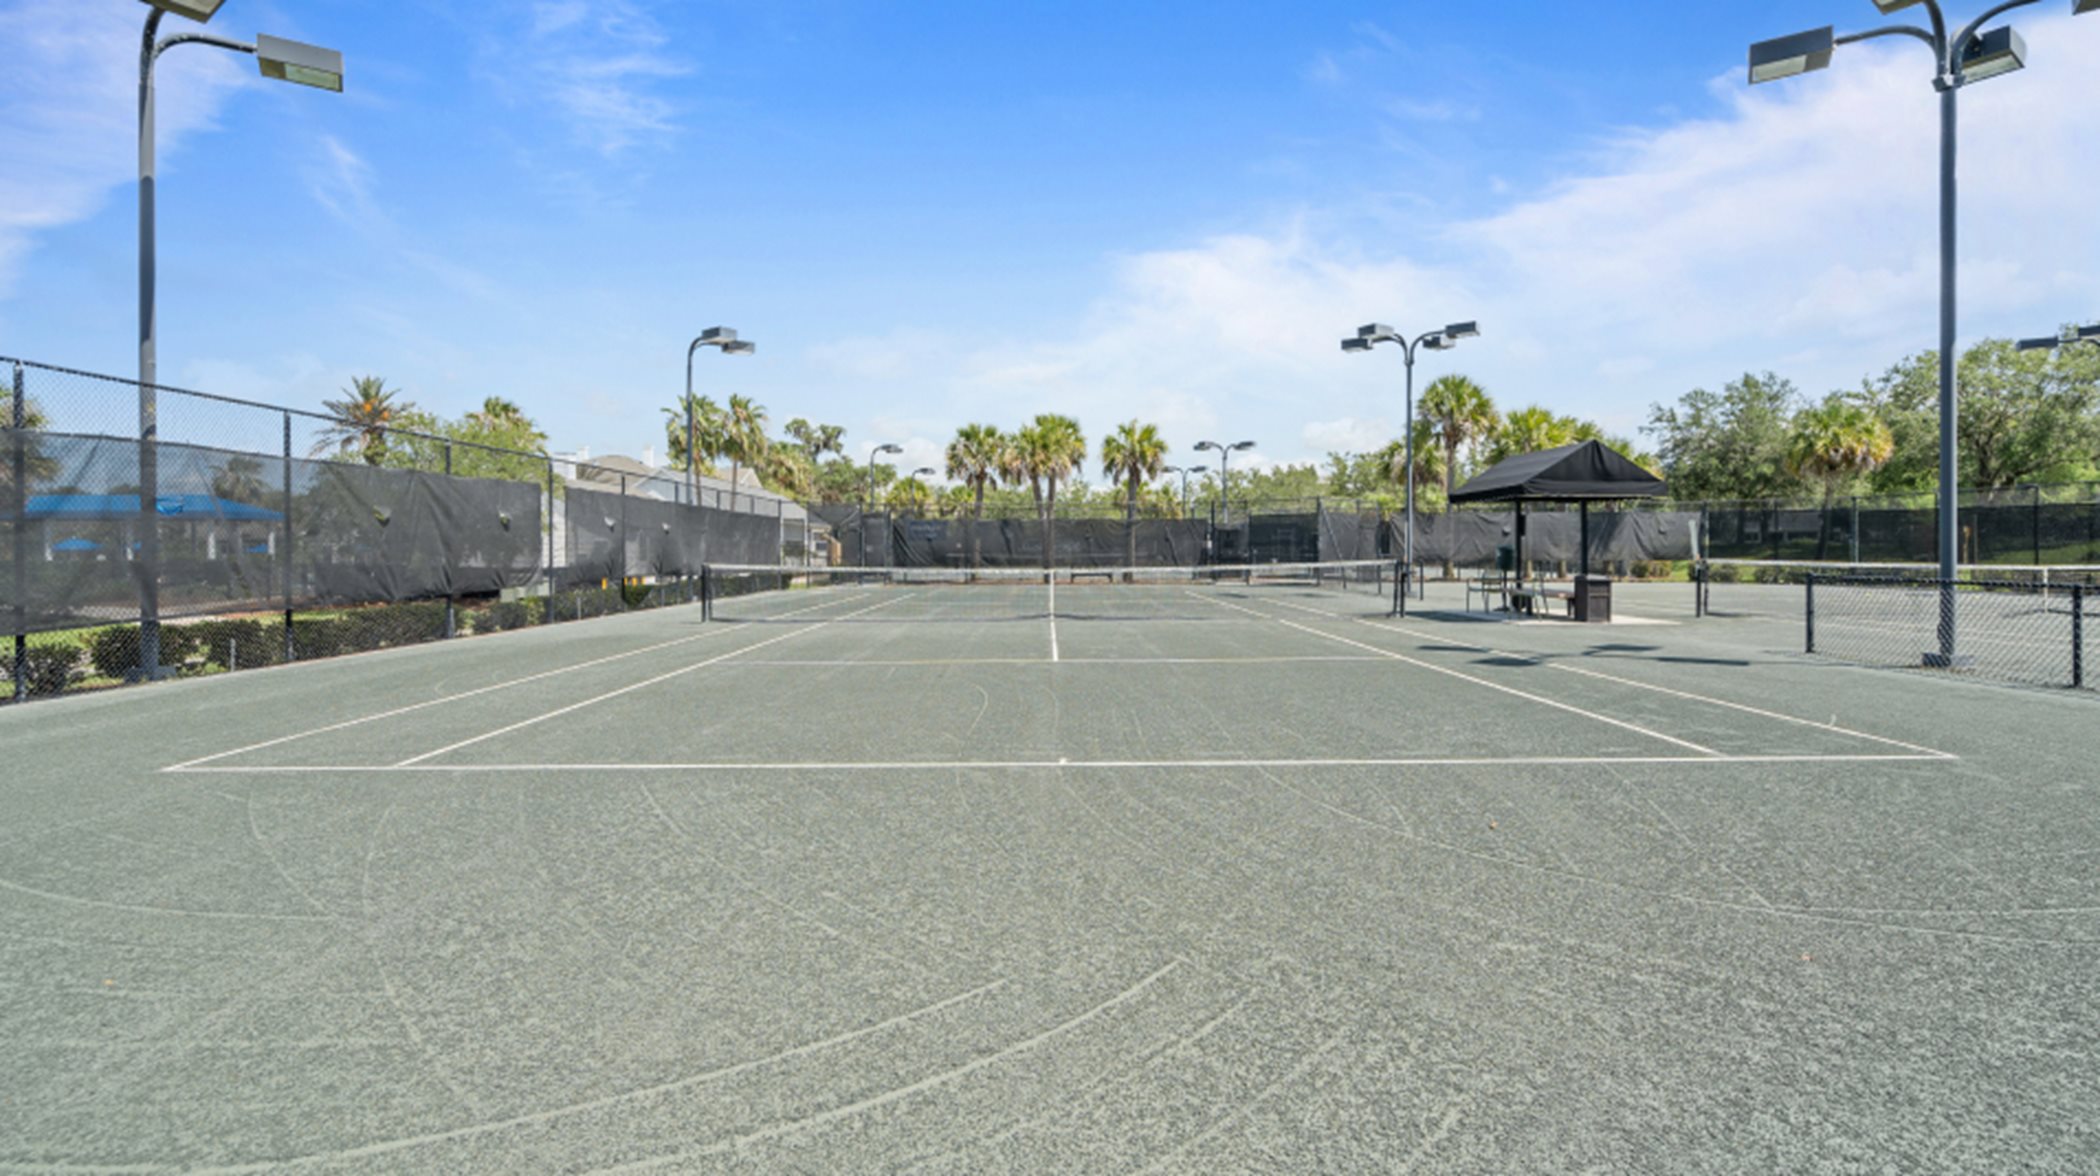 Southern hills tennis court